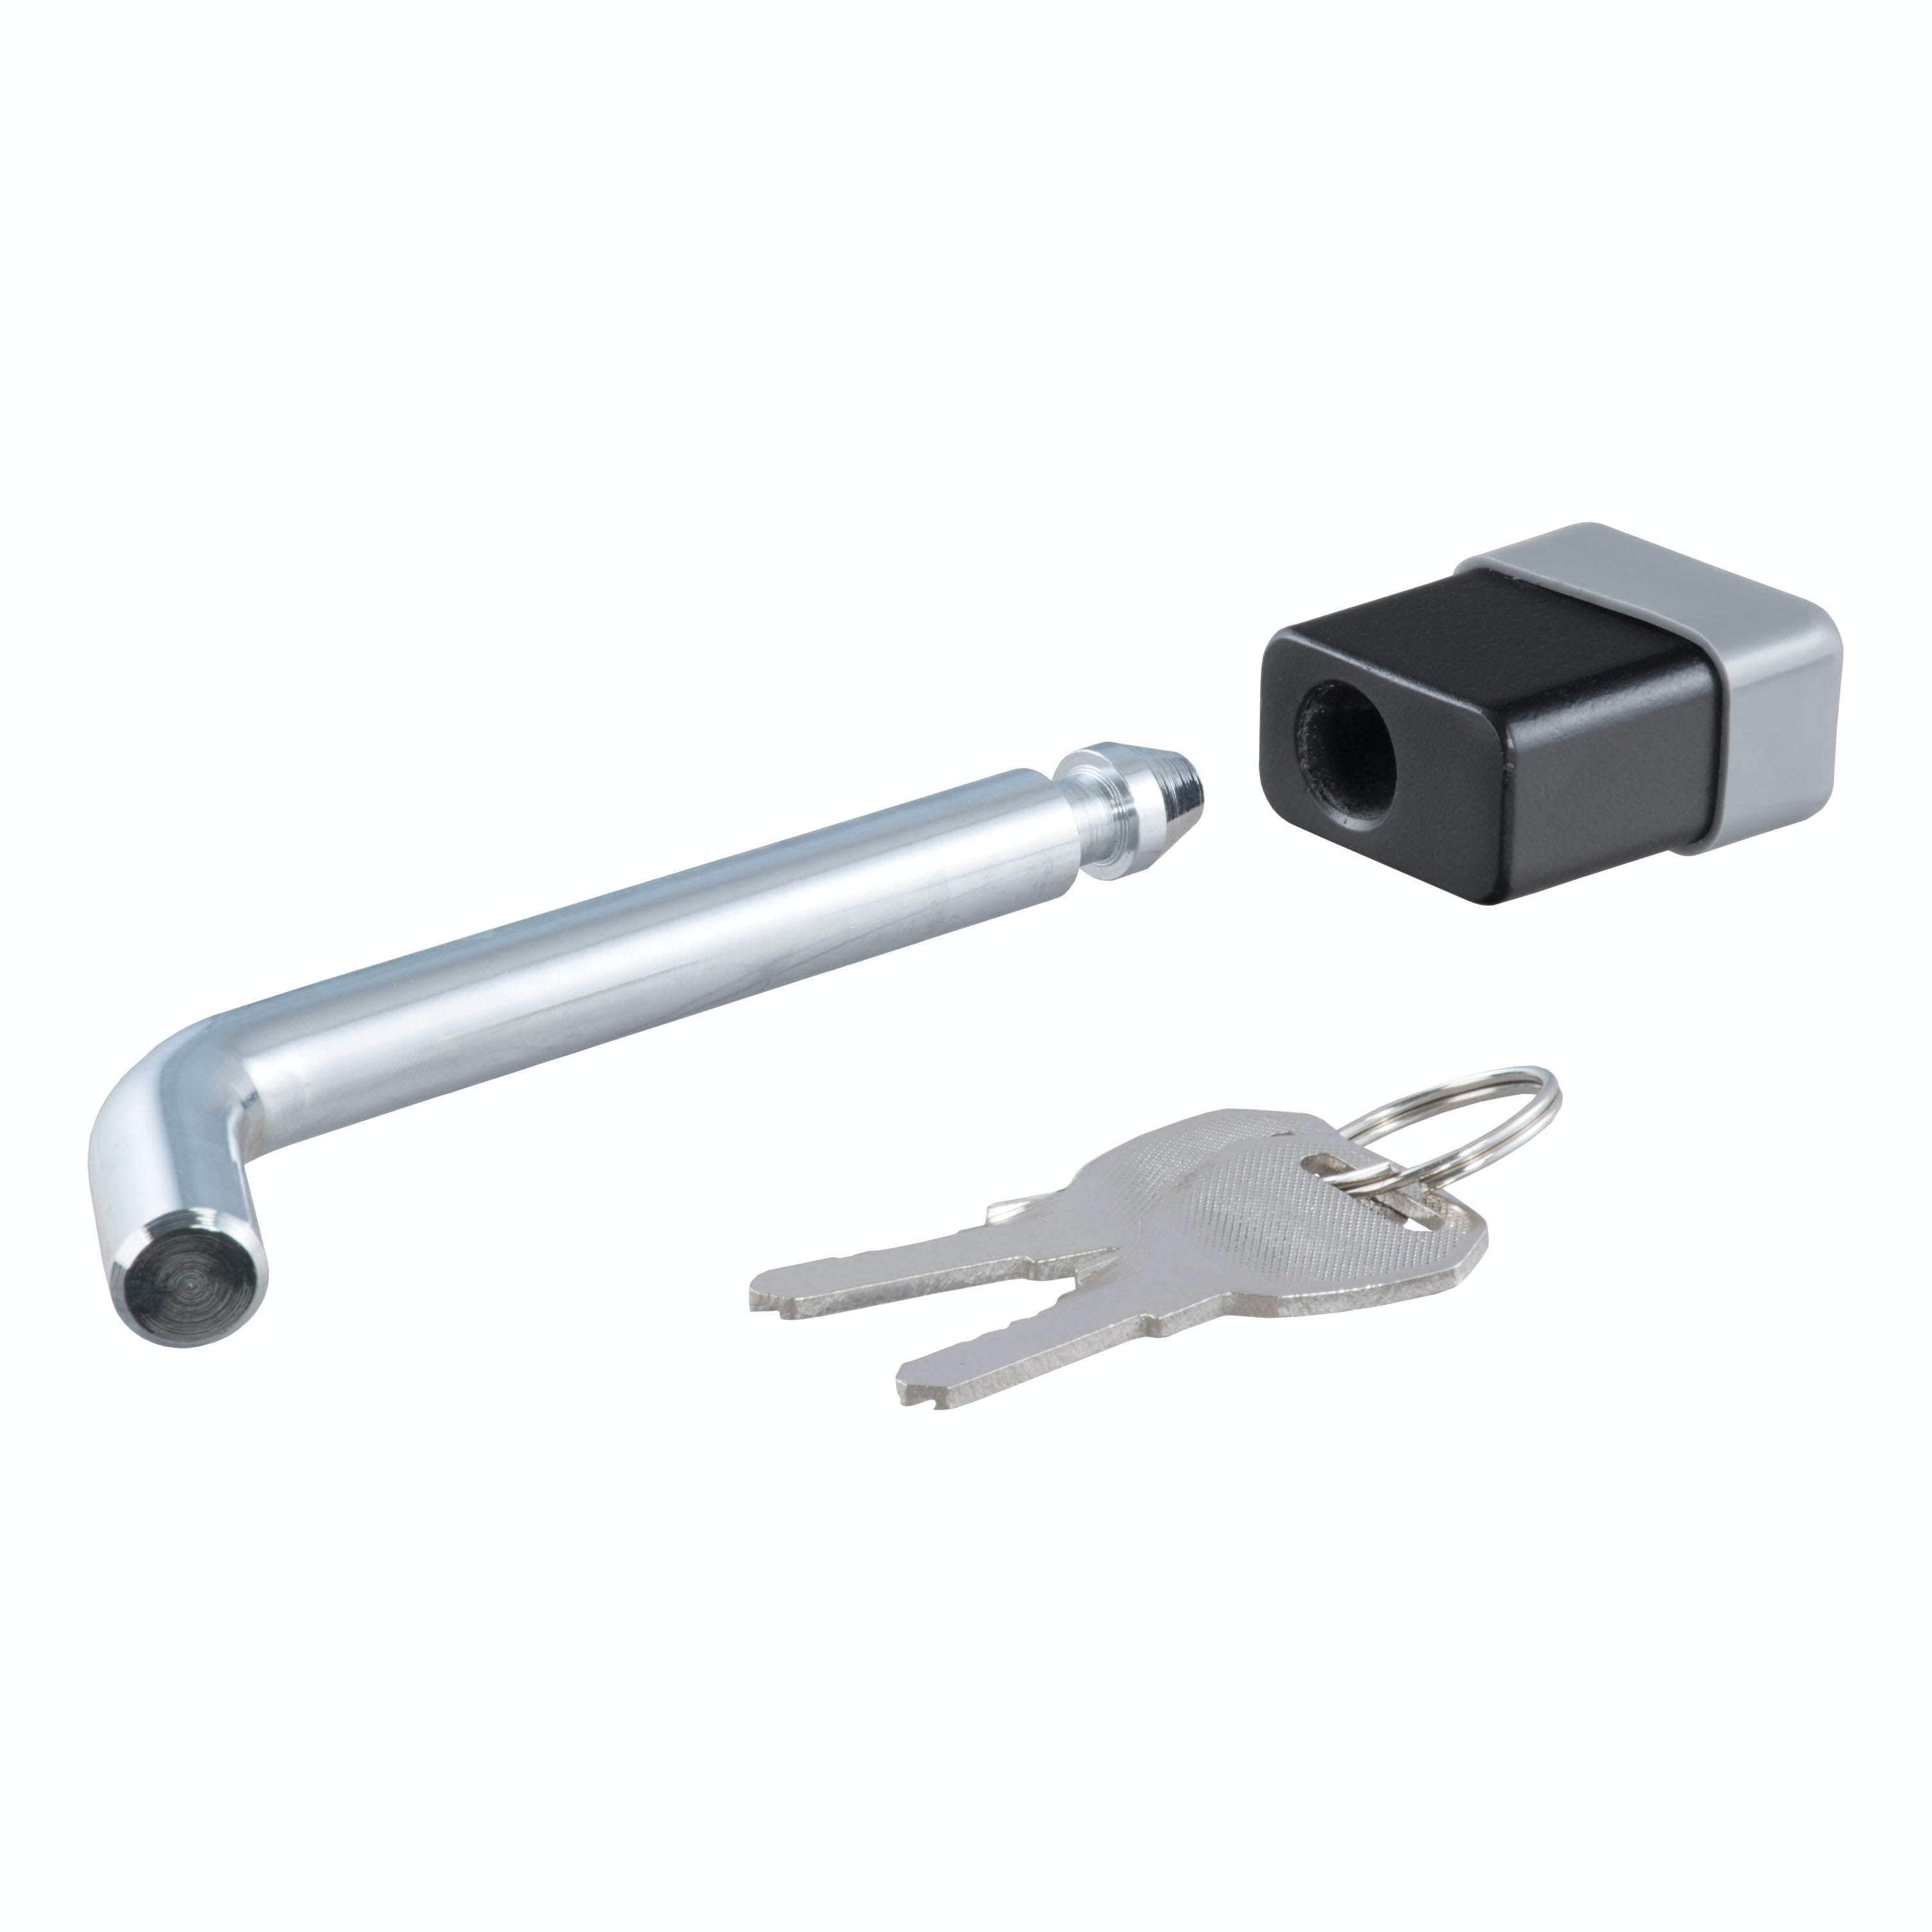 CURT 23021 5/8 Hitch Lock (2, 2-1/2 or 3 Receiver, Deadbolt, Chrome)